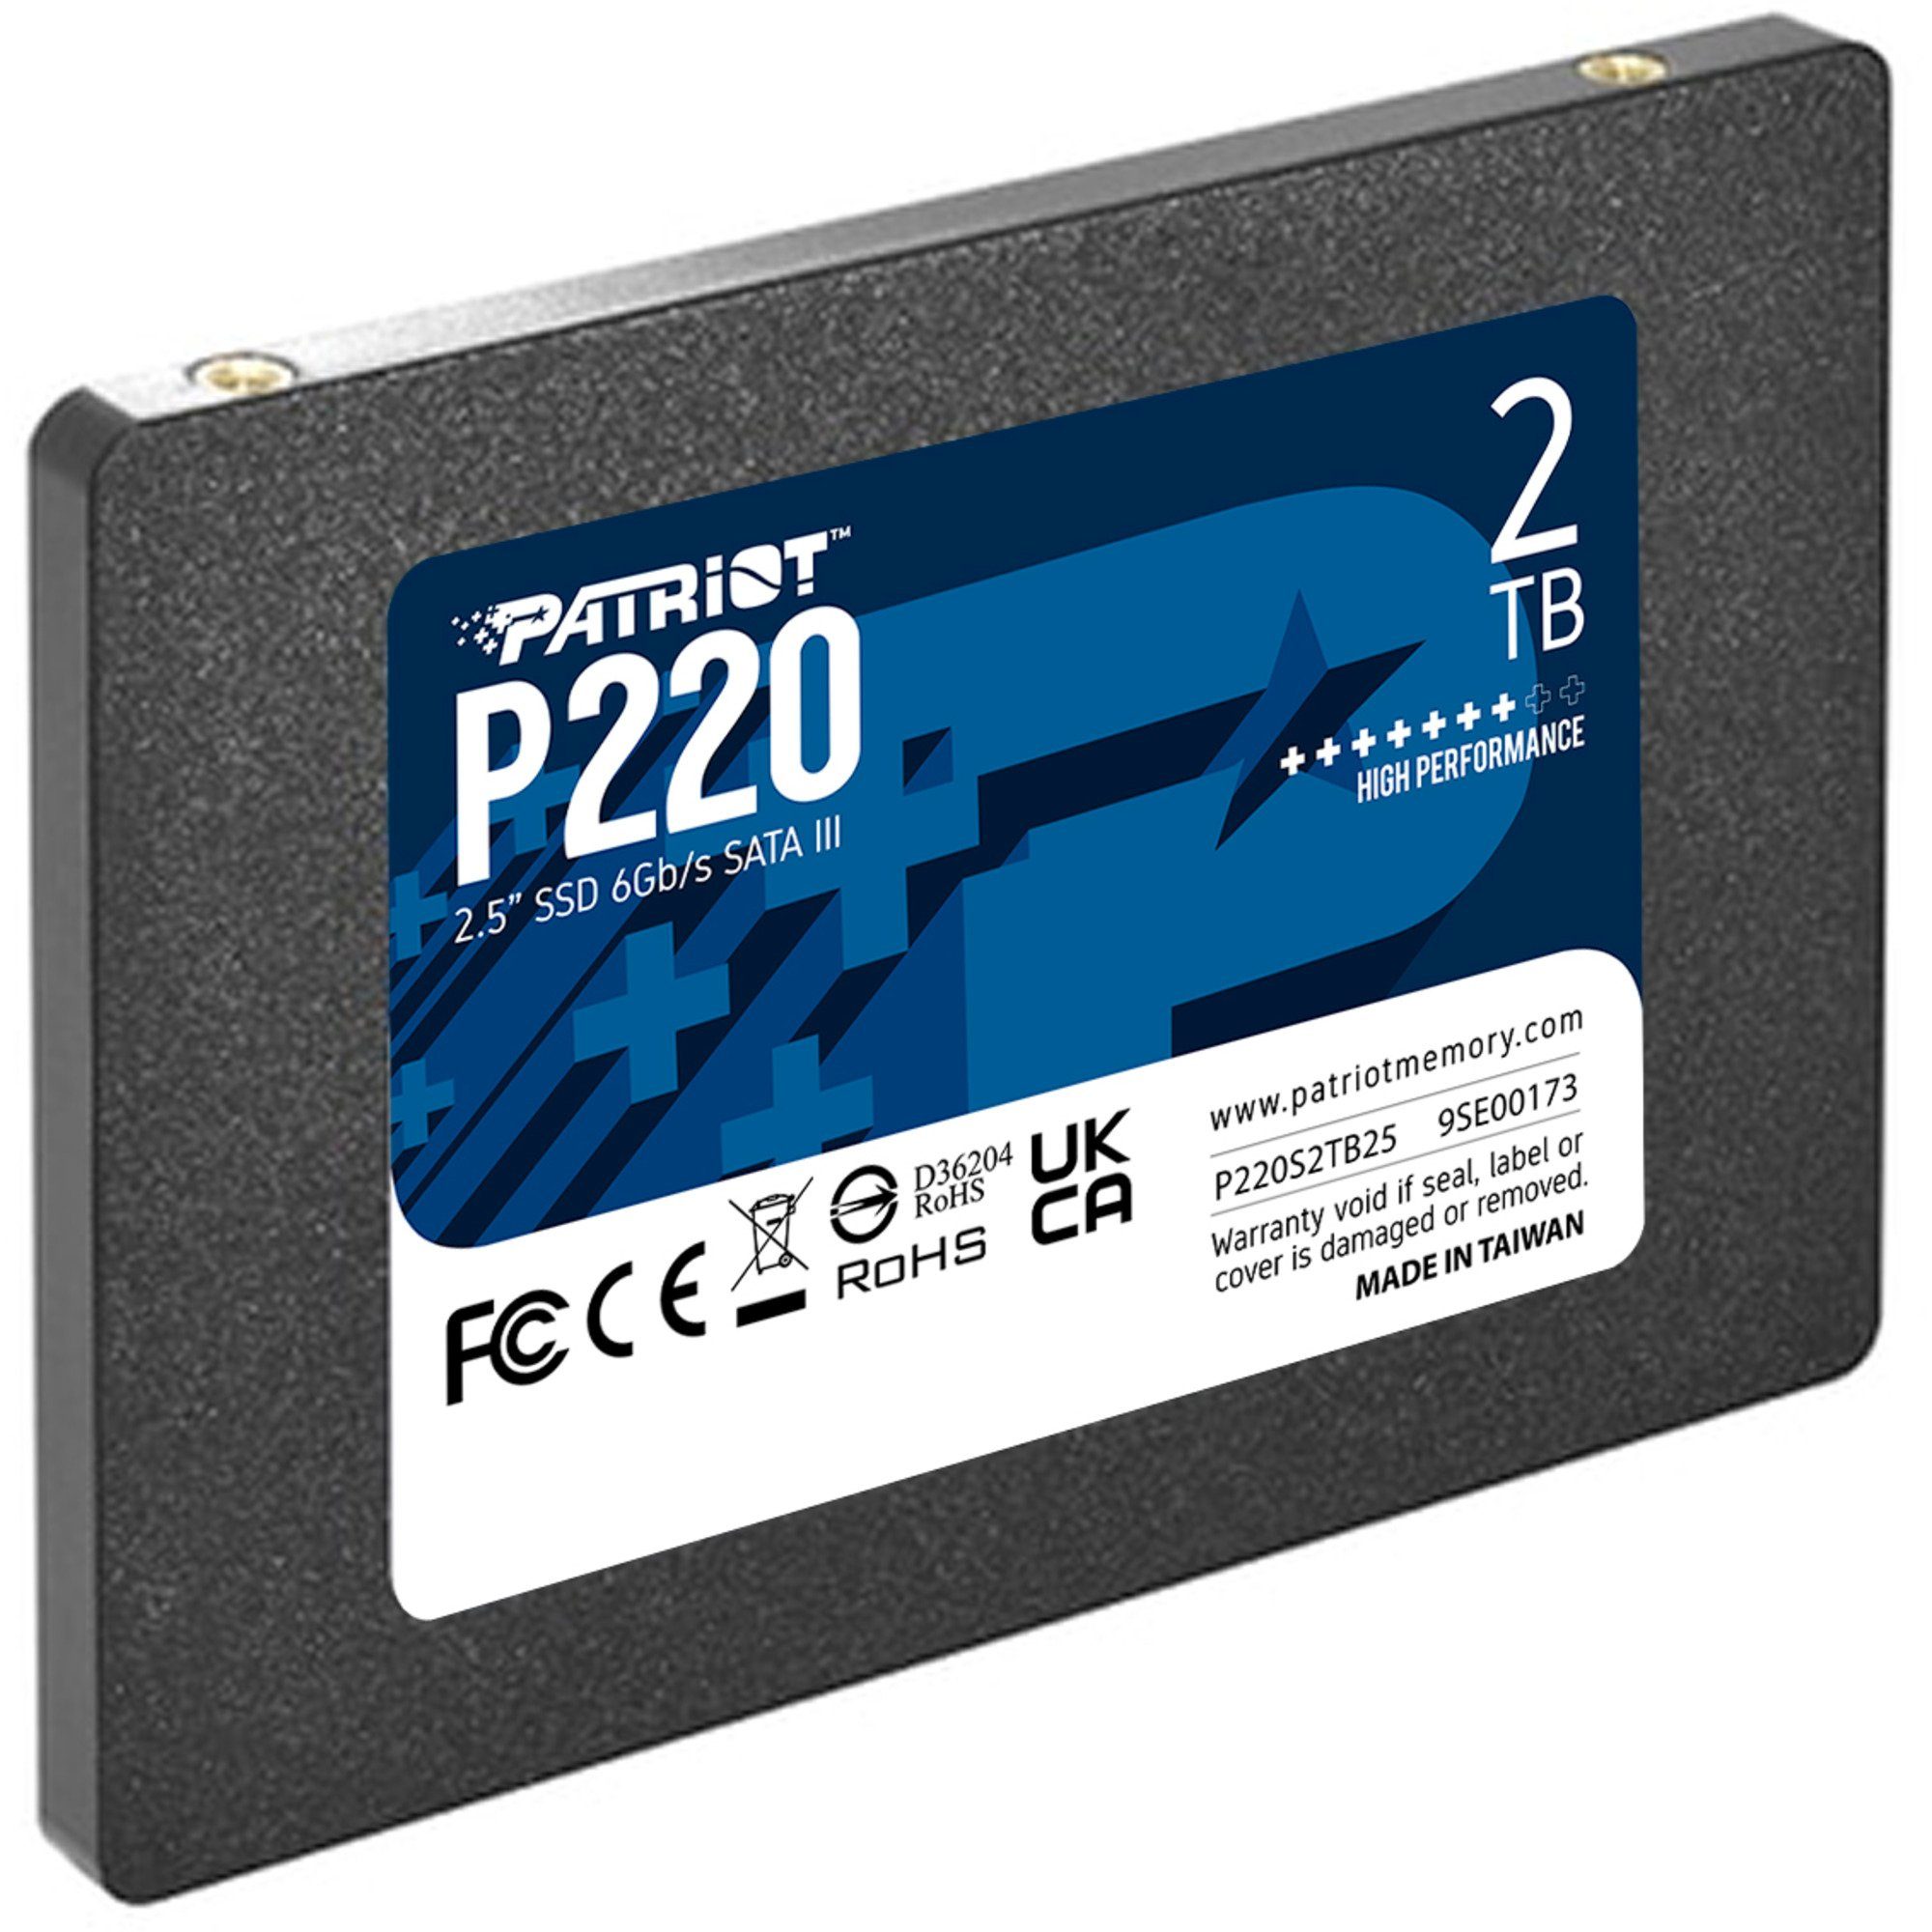 Patriot P220 2 TB, SATA III 6 Gb/s, 2,5" SSD-Festplatte